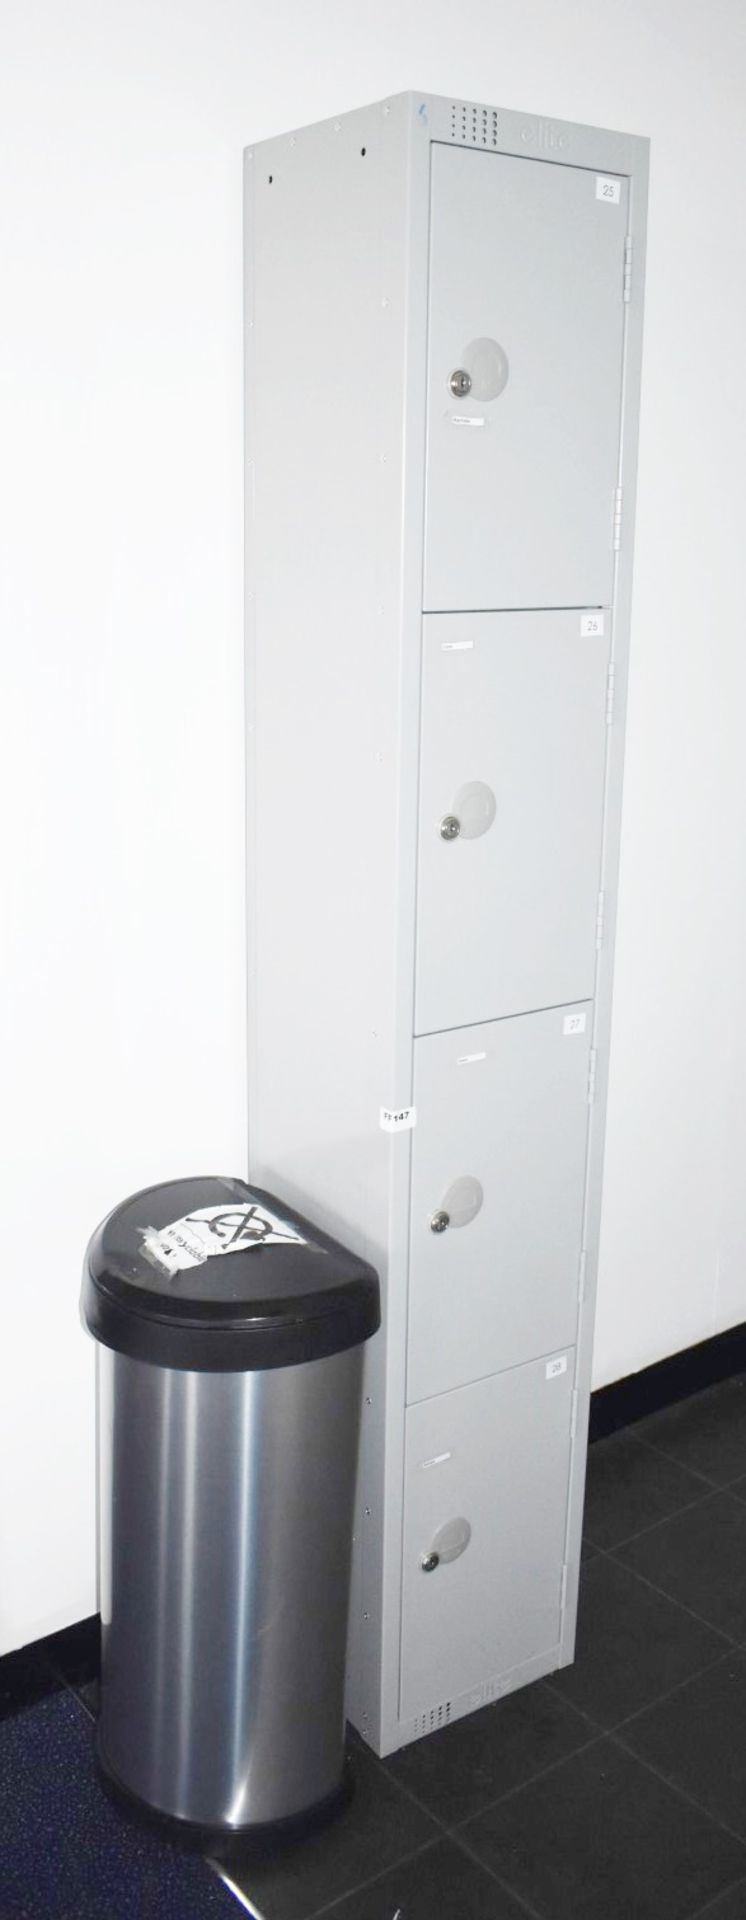 1 x Elite Four Door Staff Locker Without Keys - Includes Waste Bin - Ref: FF147 U - CL544 - - Image 2 of 3